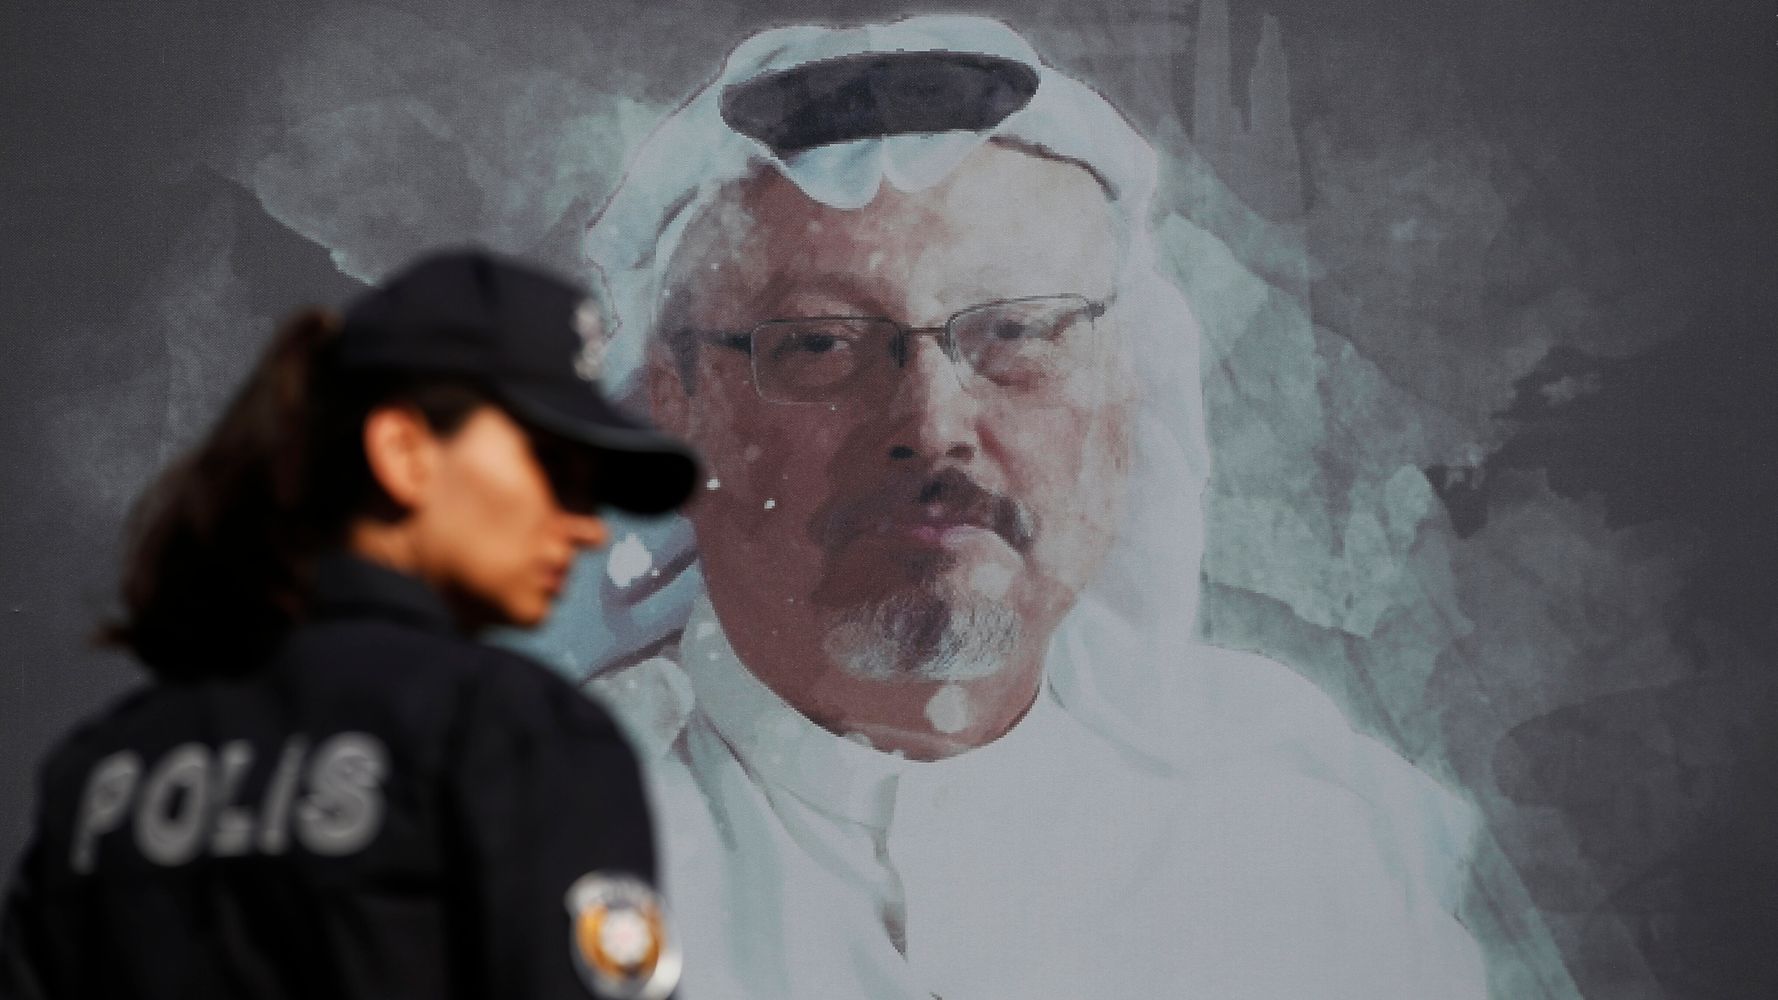 Turkey Seeks Justice For Jamal Khashoggi After 'Sham' Saudi Trial